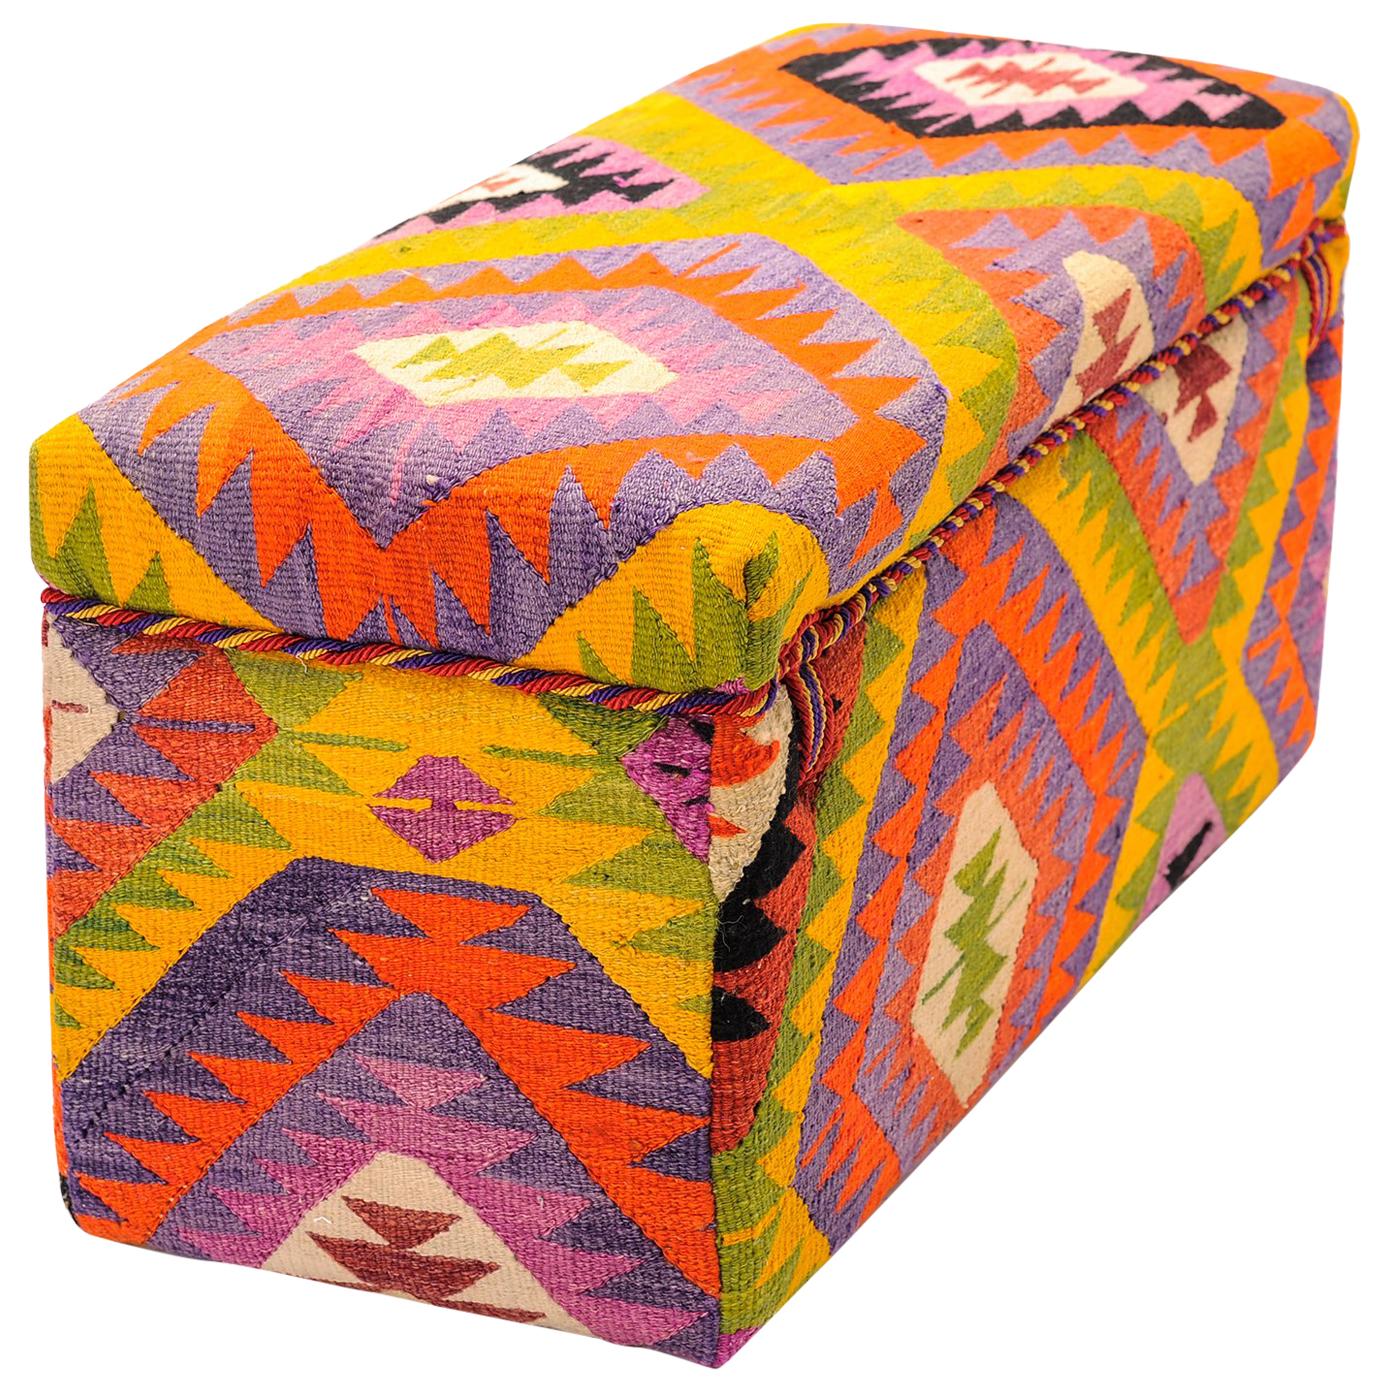 Kilim Upholstered Bench or Pouf with Modern Taste